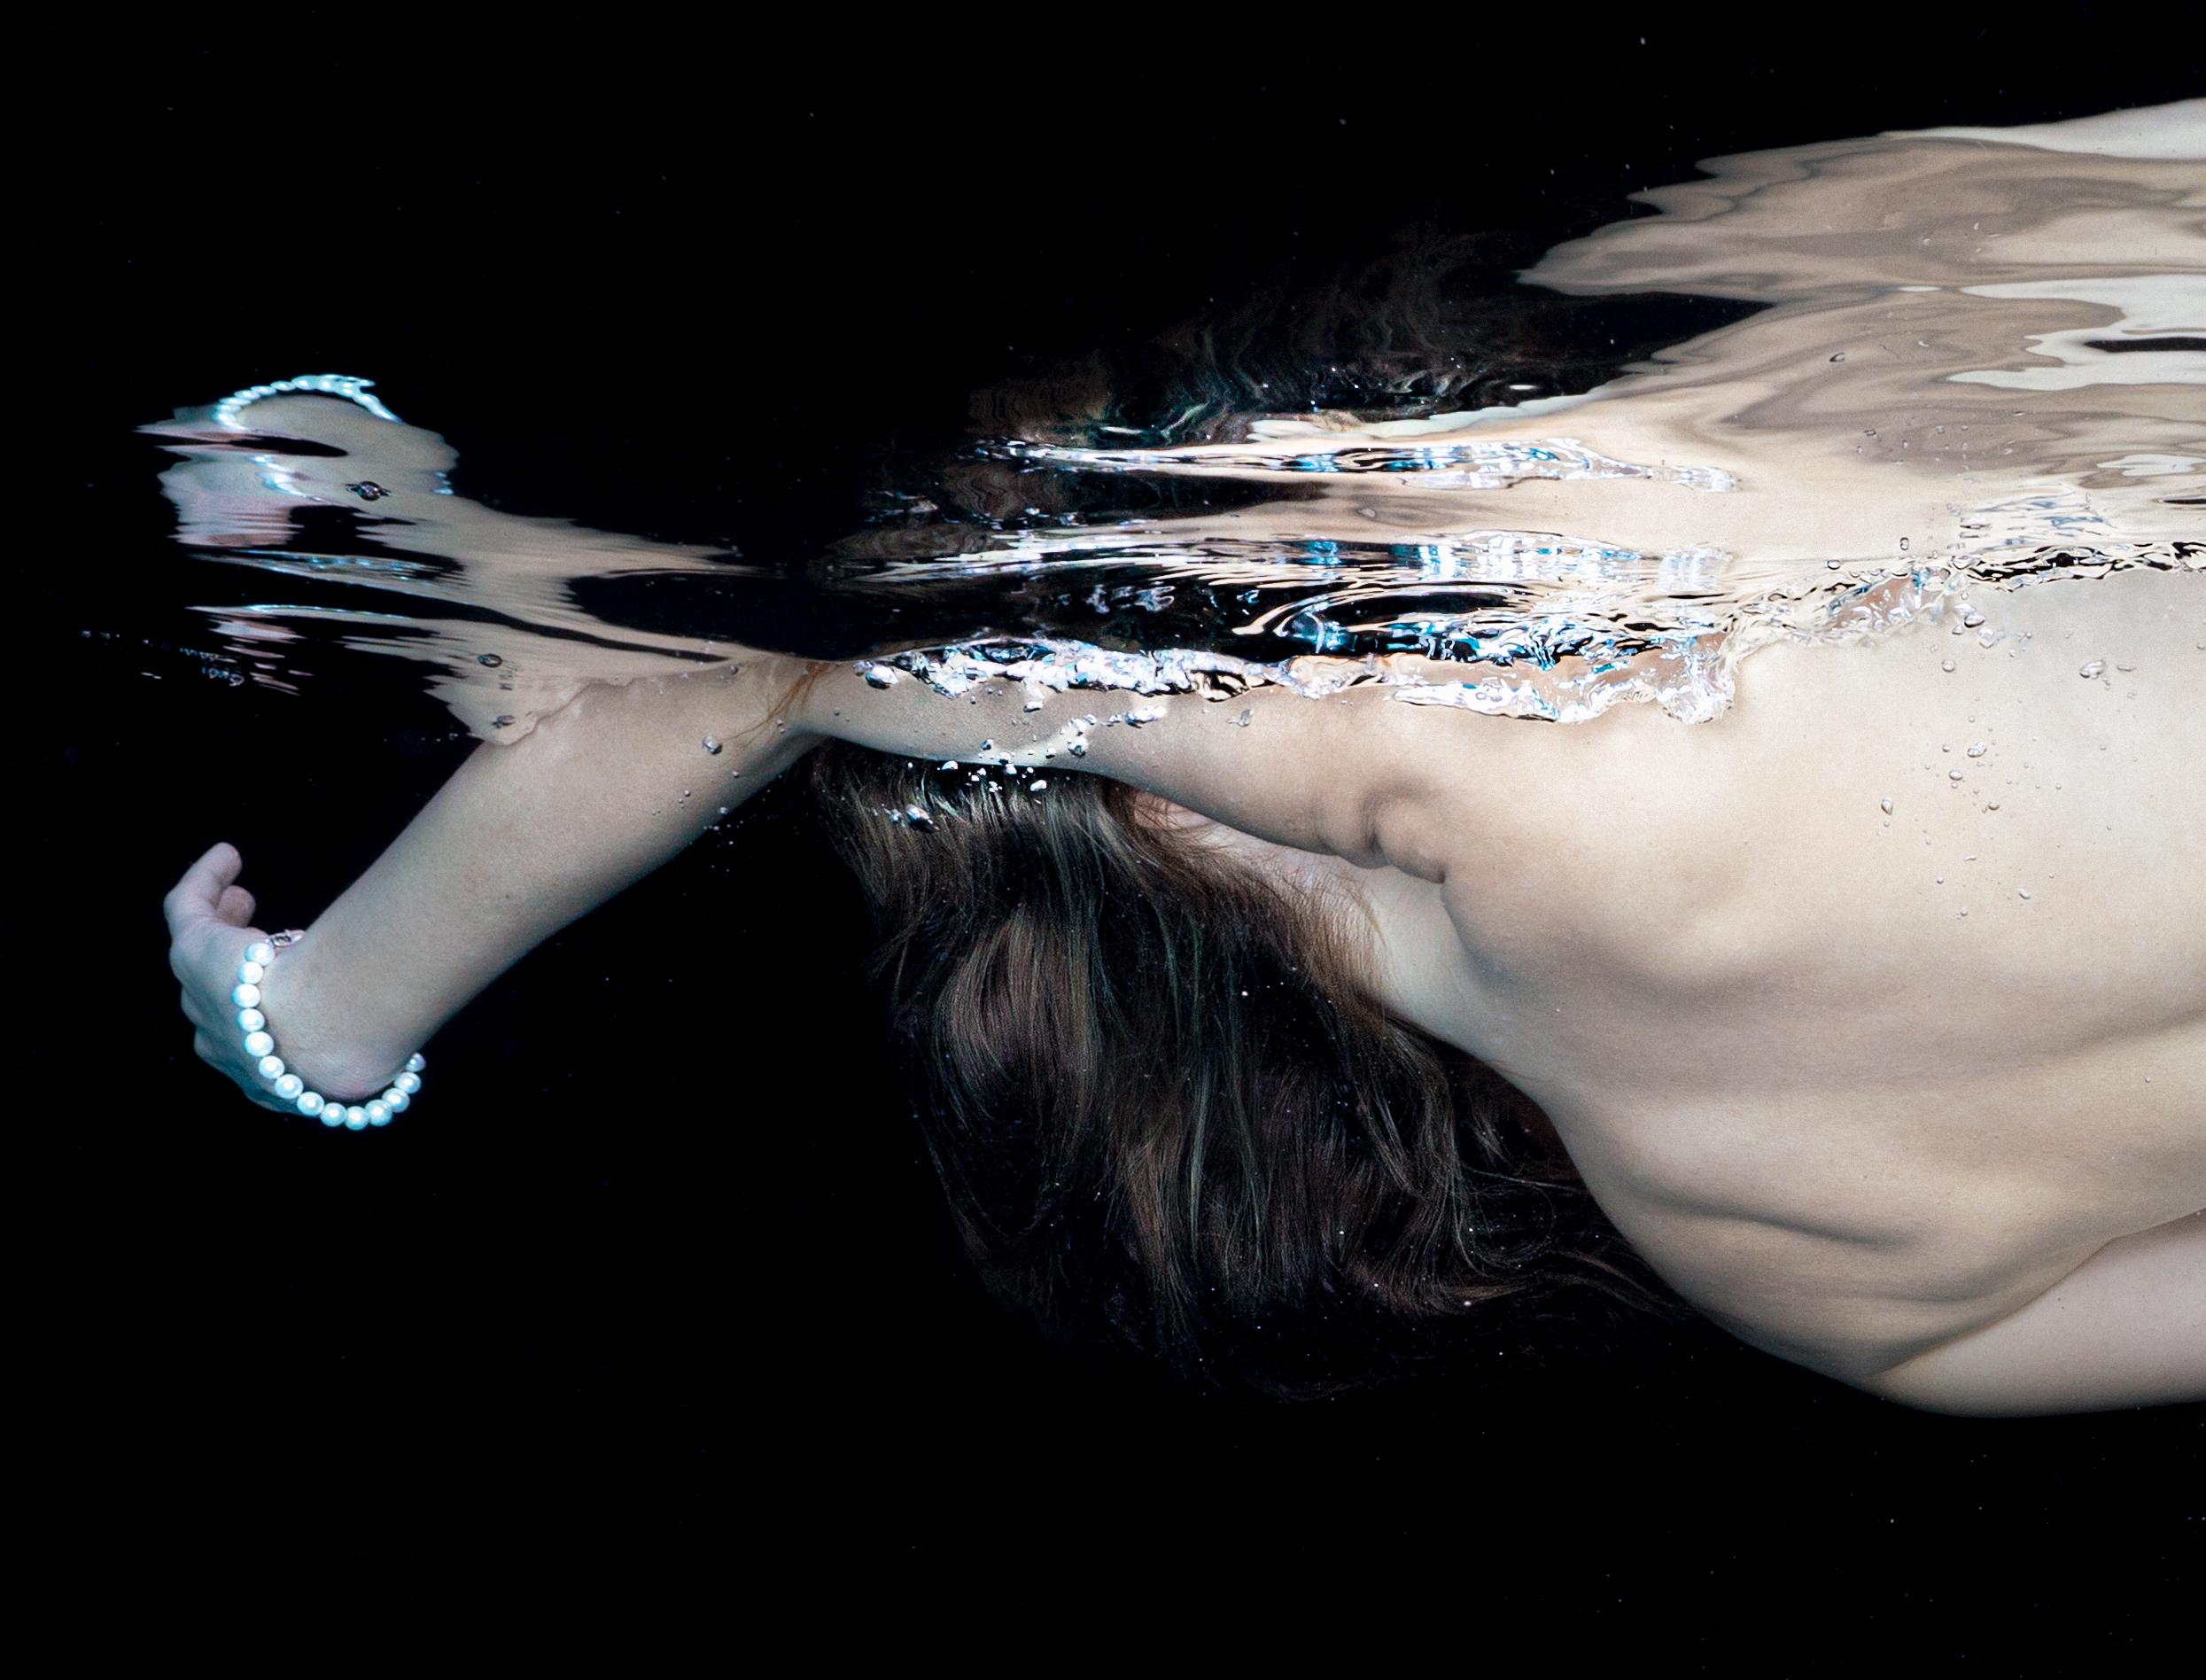 Porcelain II  - underwater nude photograph - archival pigment print 43x64